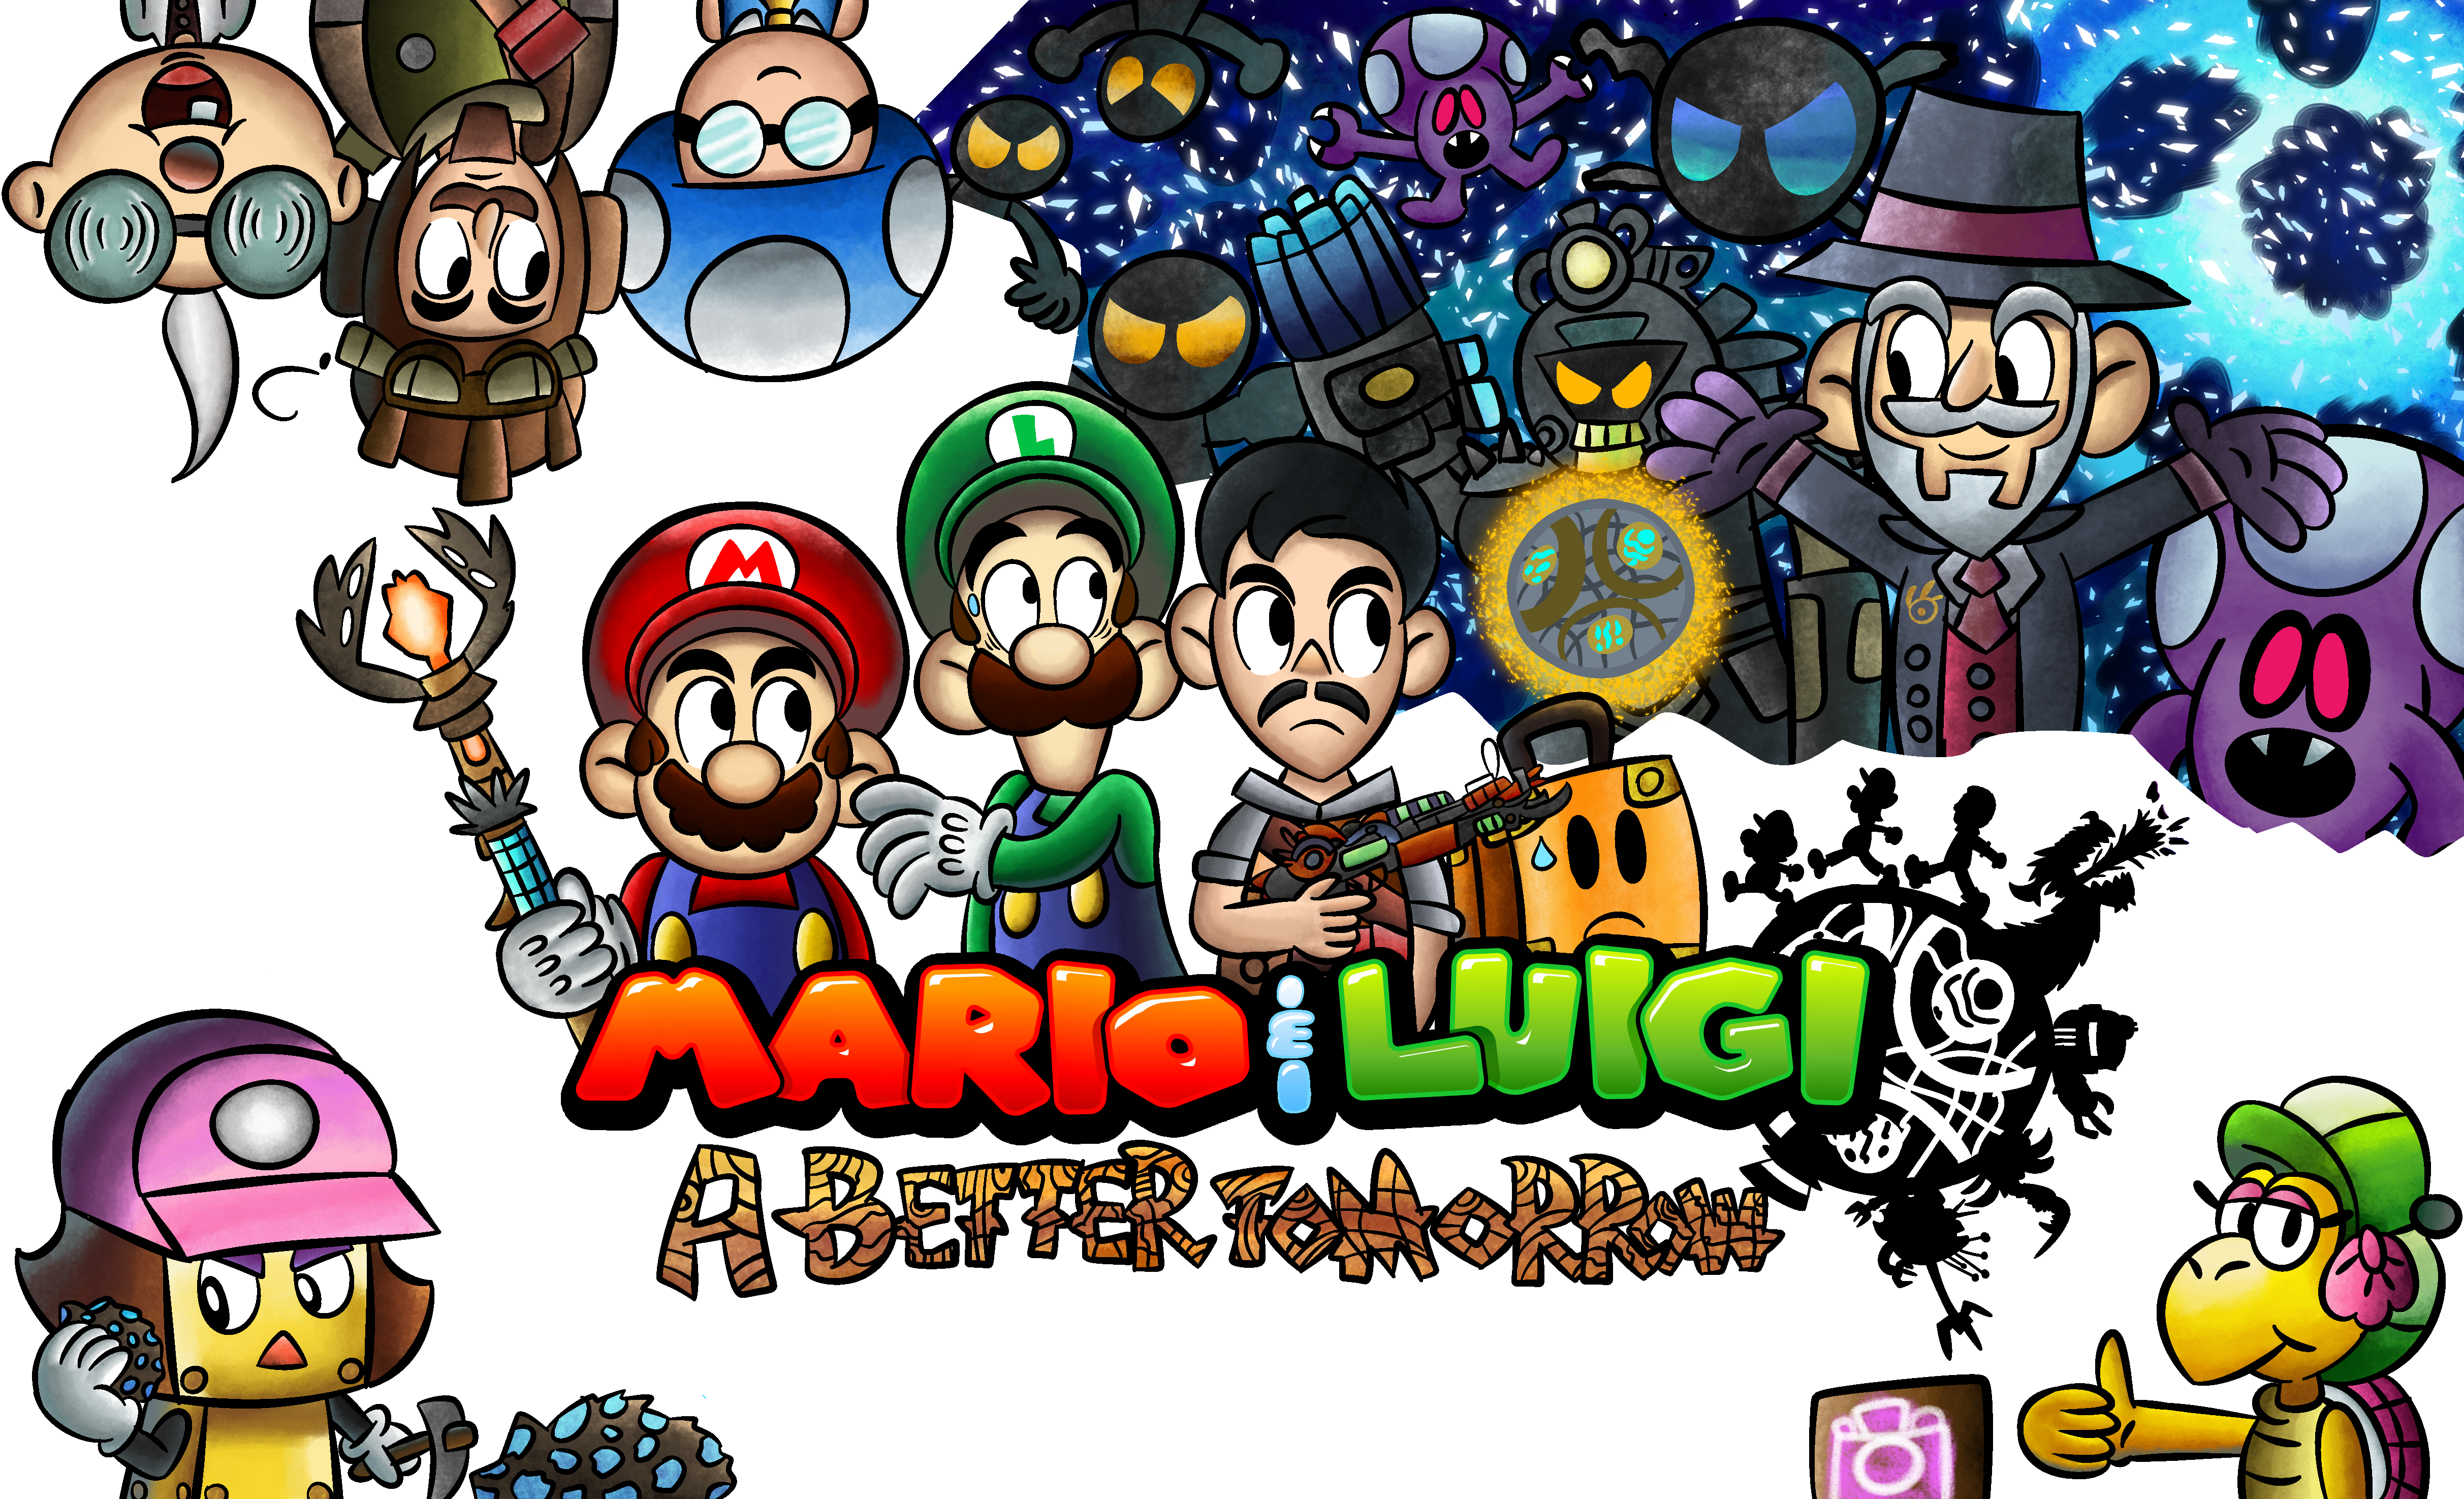 Mario + Luigi: A Better Tomorrow by BoredRabbit on DeviantArt